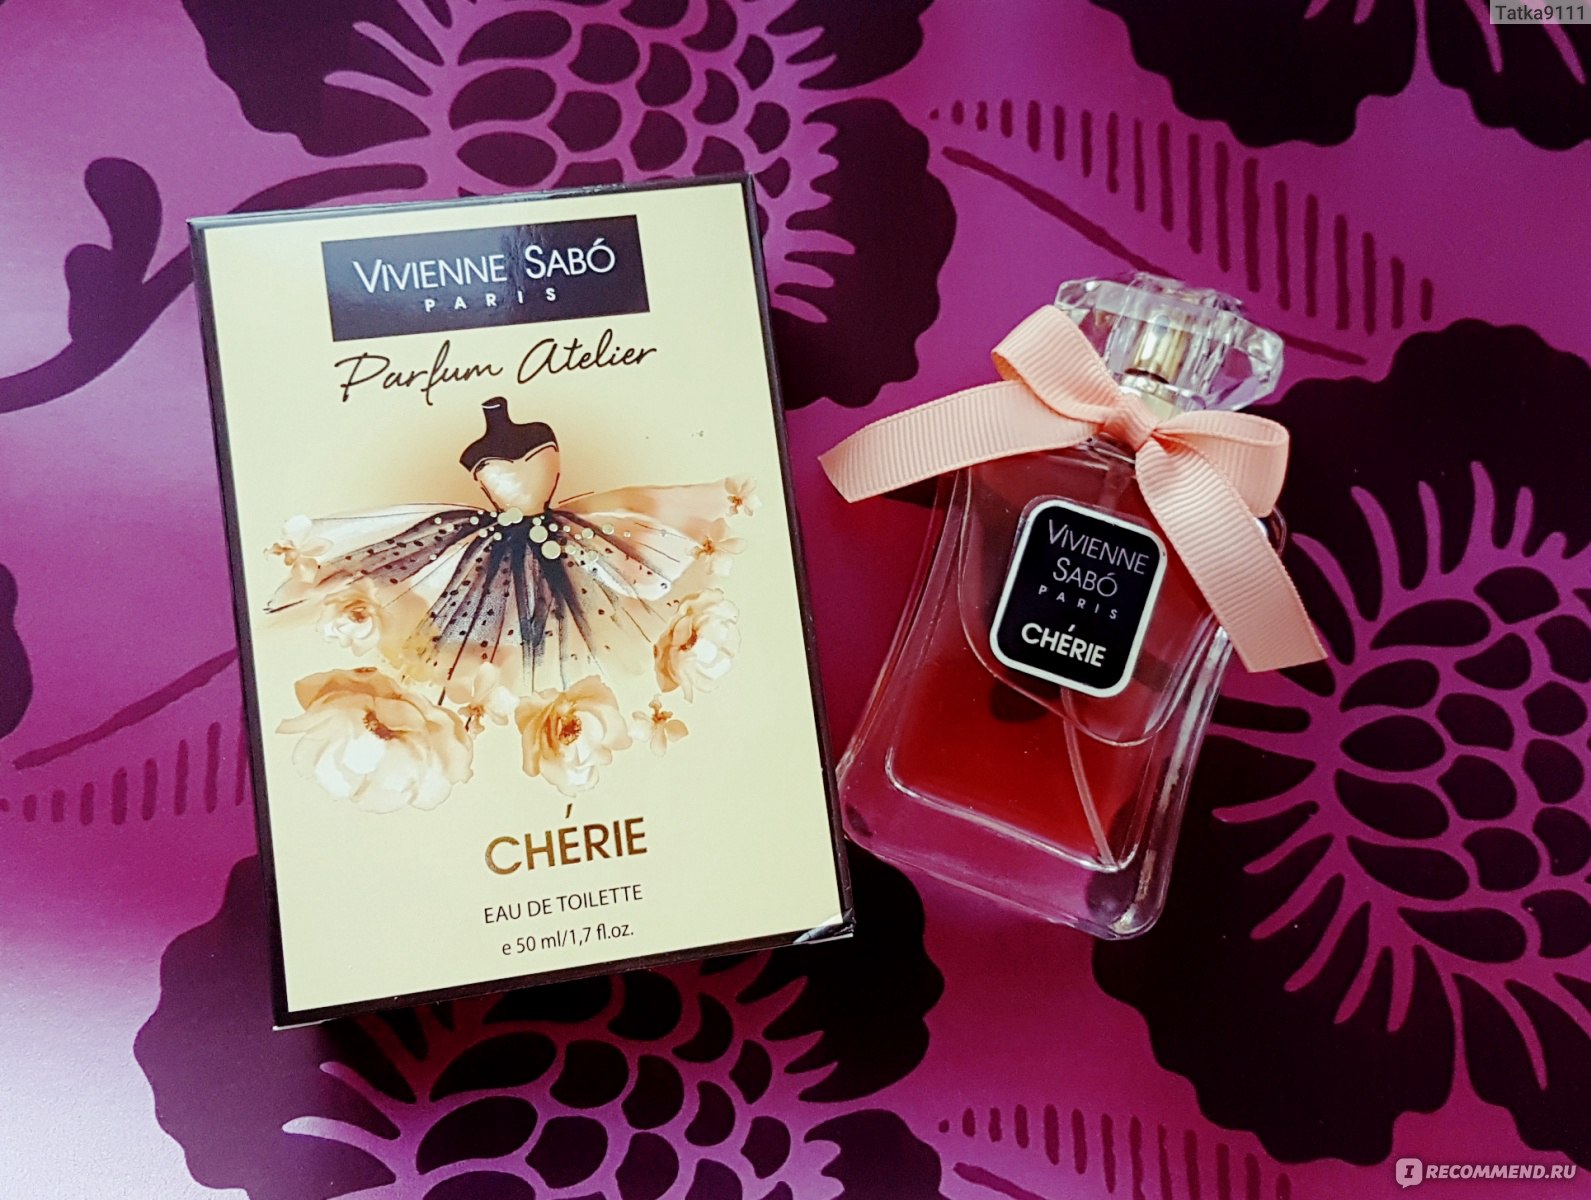 Ательер отзывы. Atelier Parfum Вивьен сабо. Vivienne Sabo Paris духи. Духи Вивьен сабо Cherie.